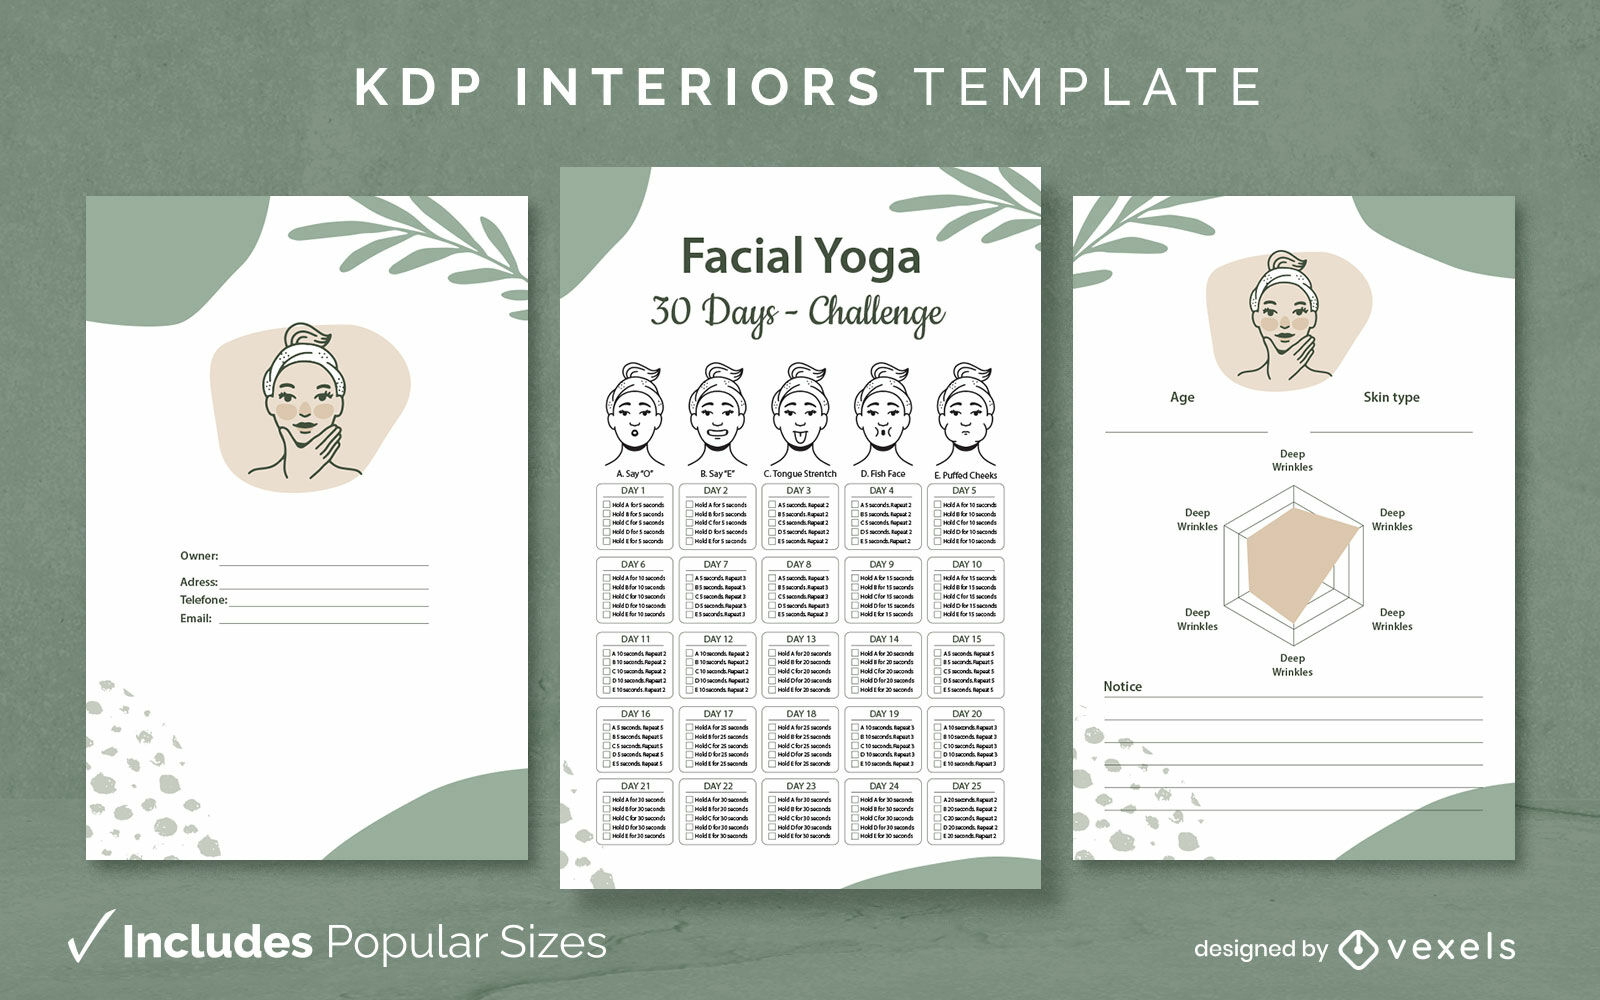 Modelo de interior do KDP de desafio de 30 dias de ioga facial